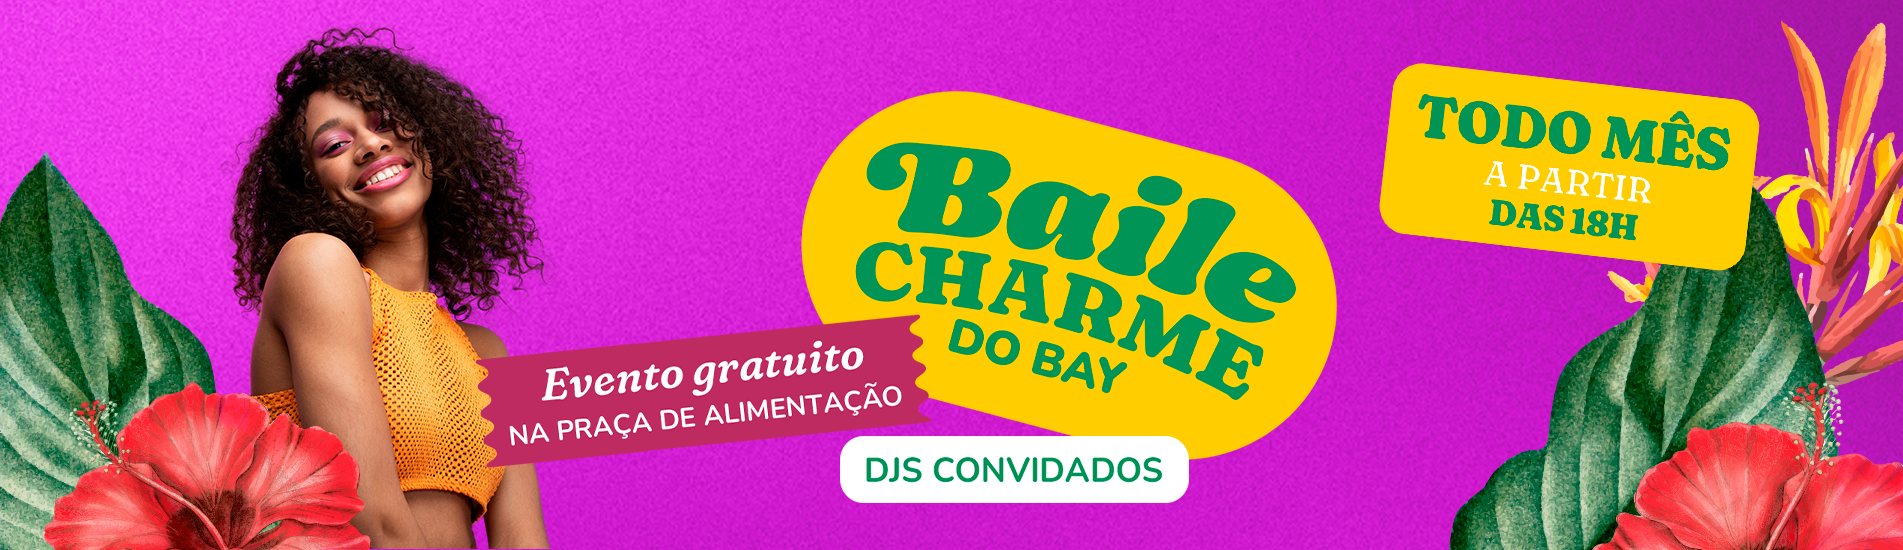 Baile Charme do Bay - Abril 